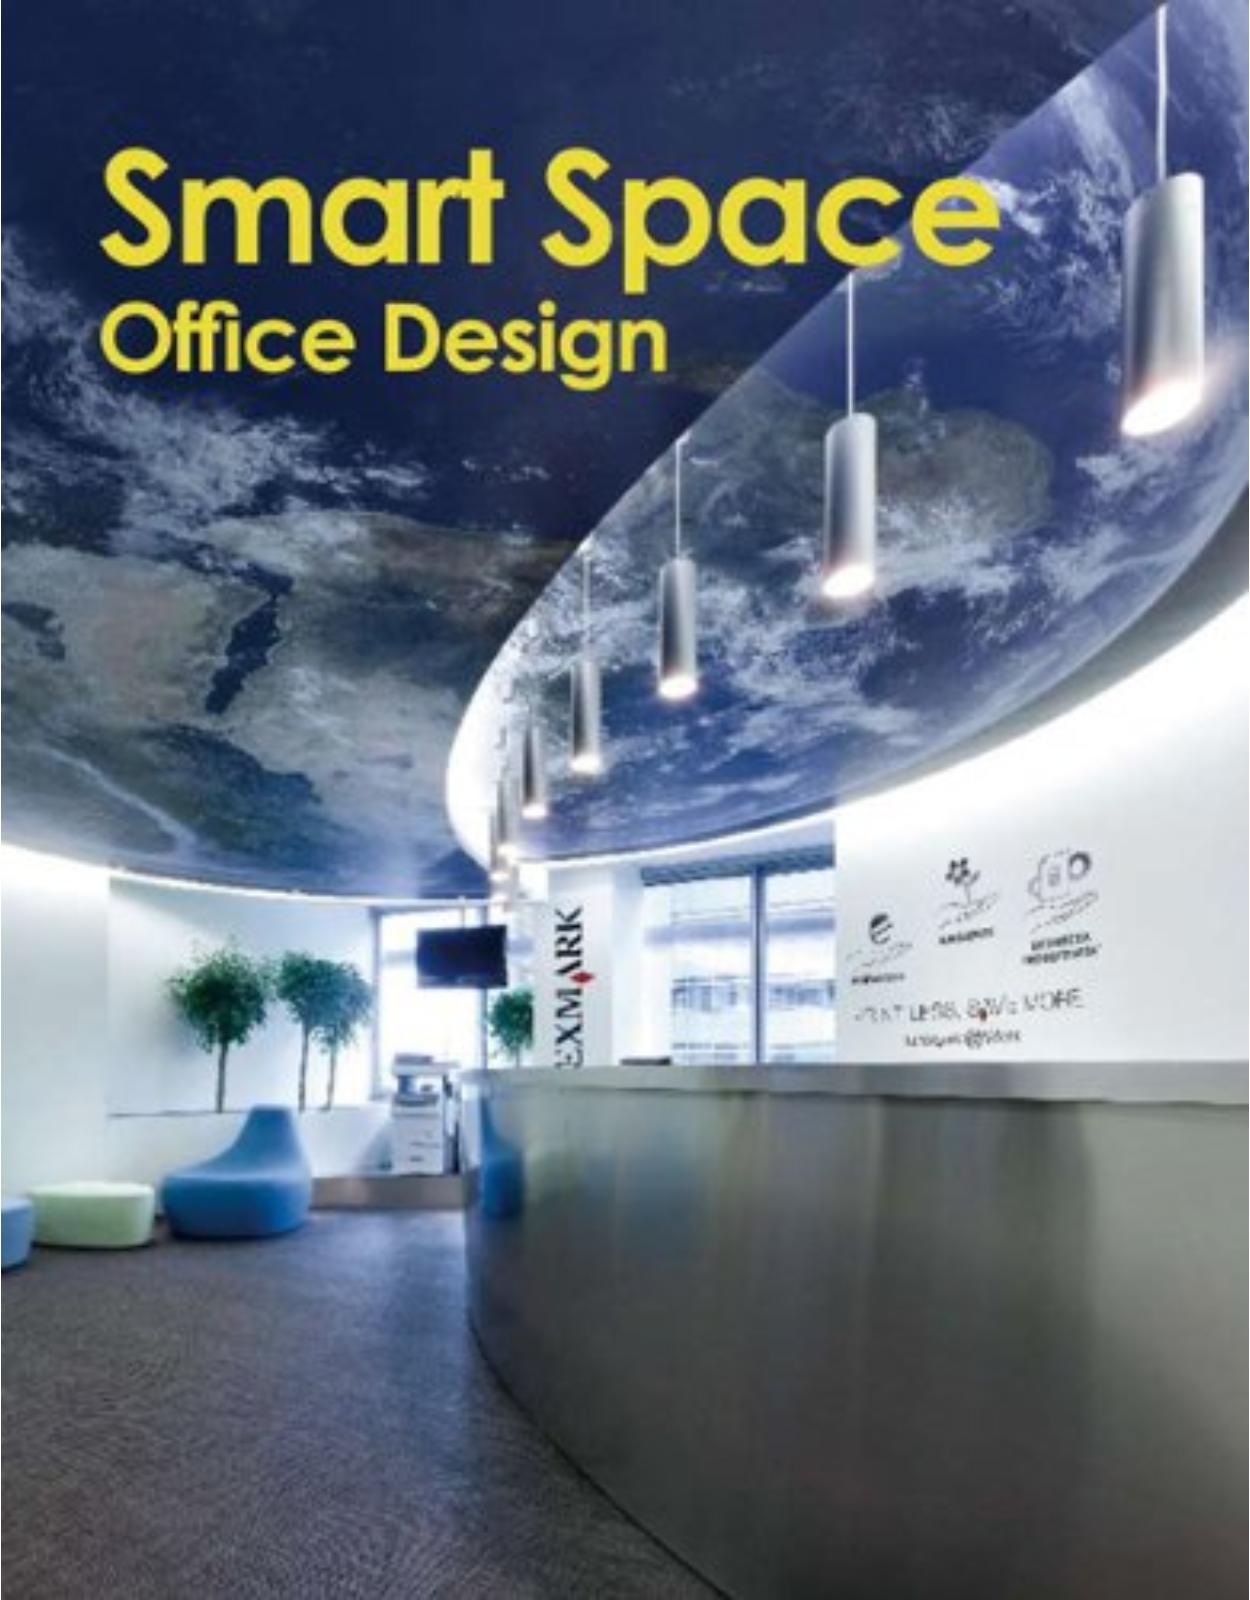 Smart space office design